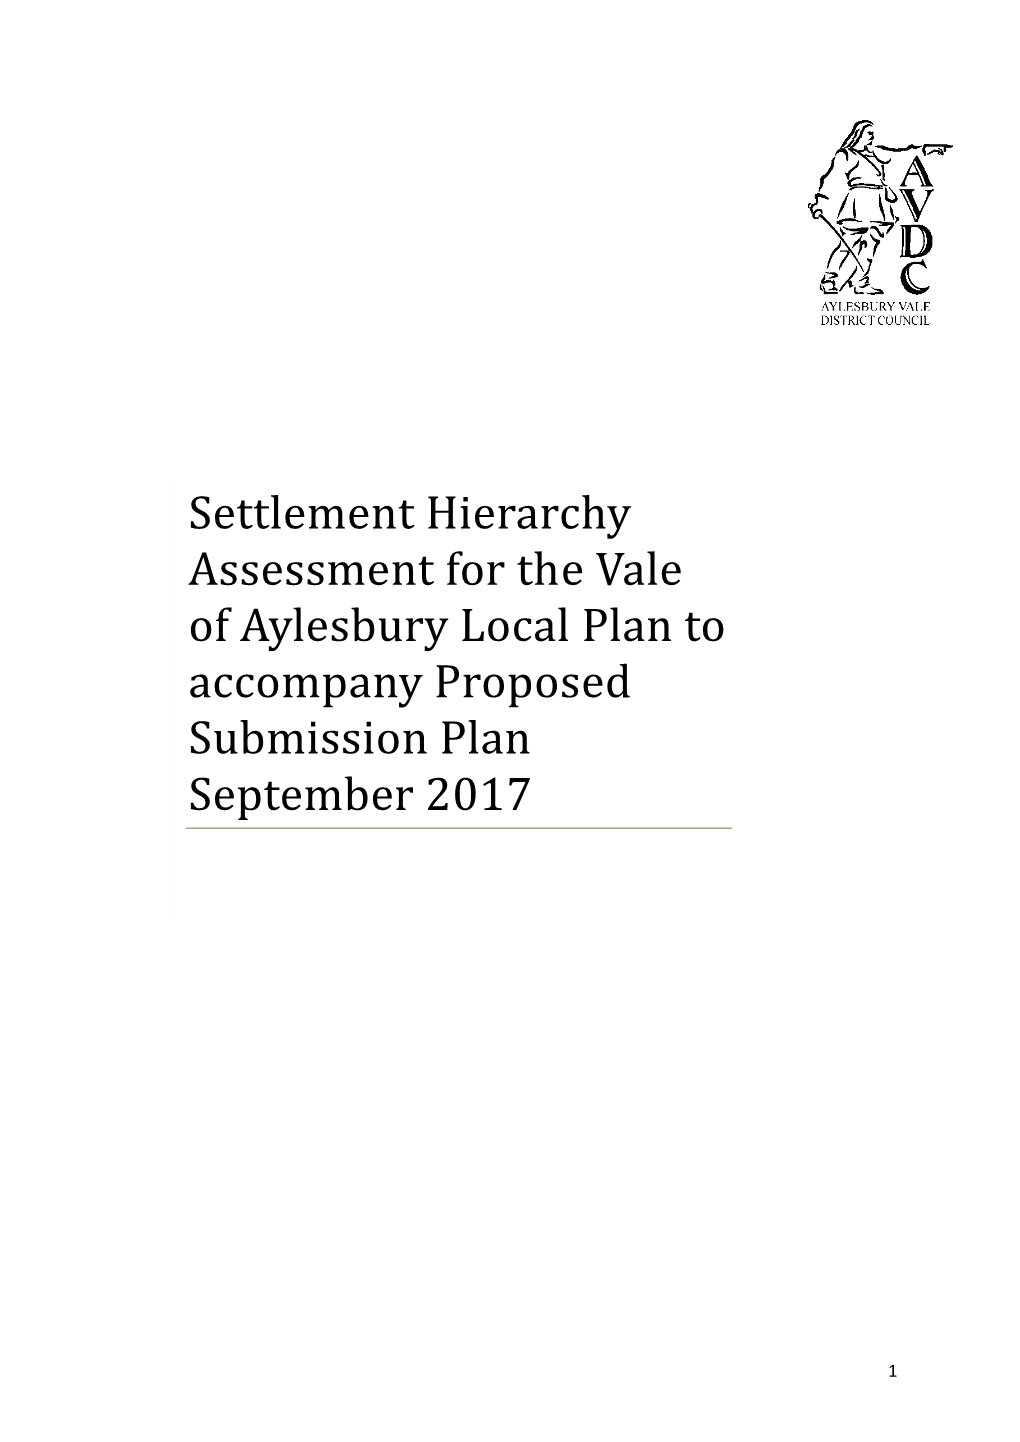 Settlement Hierarchy Assessment Report September 2017